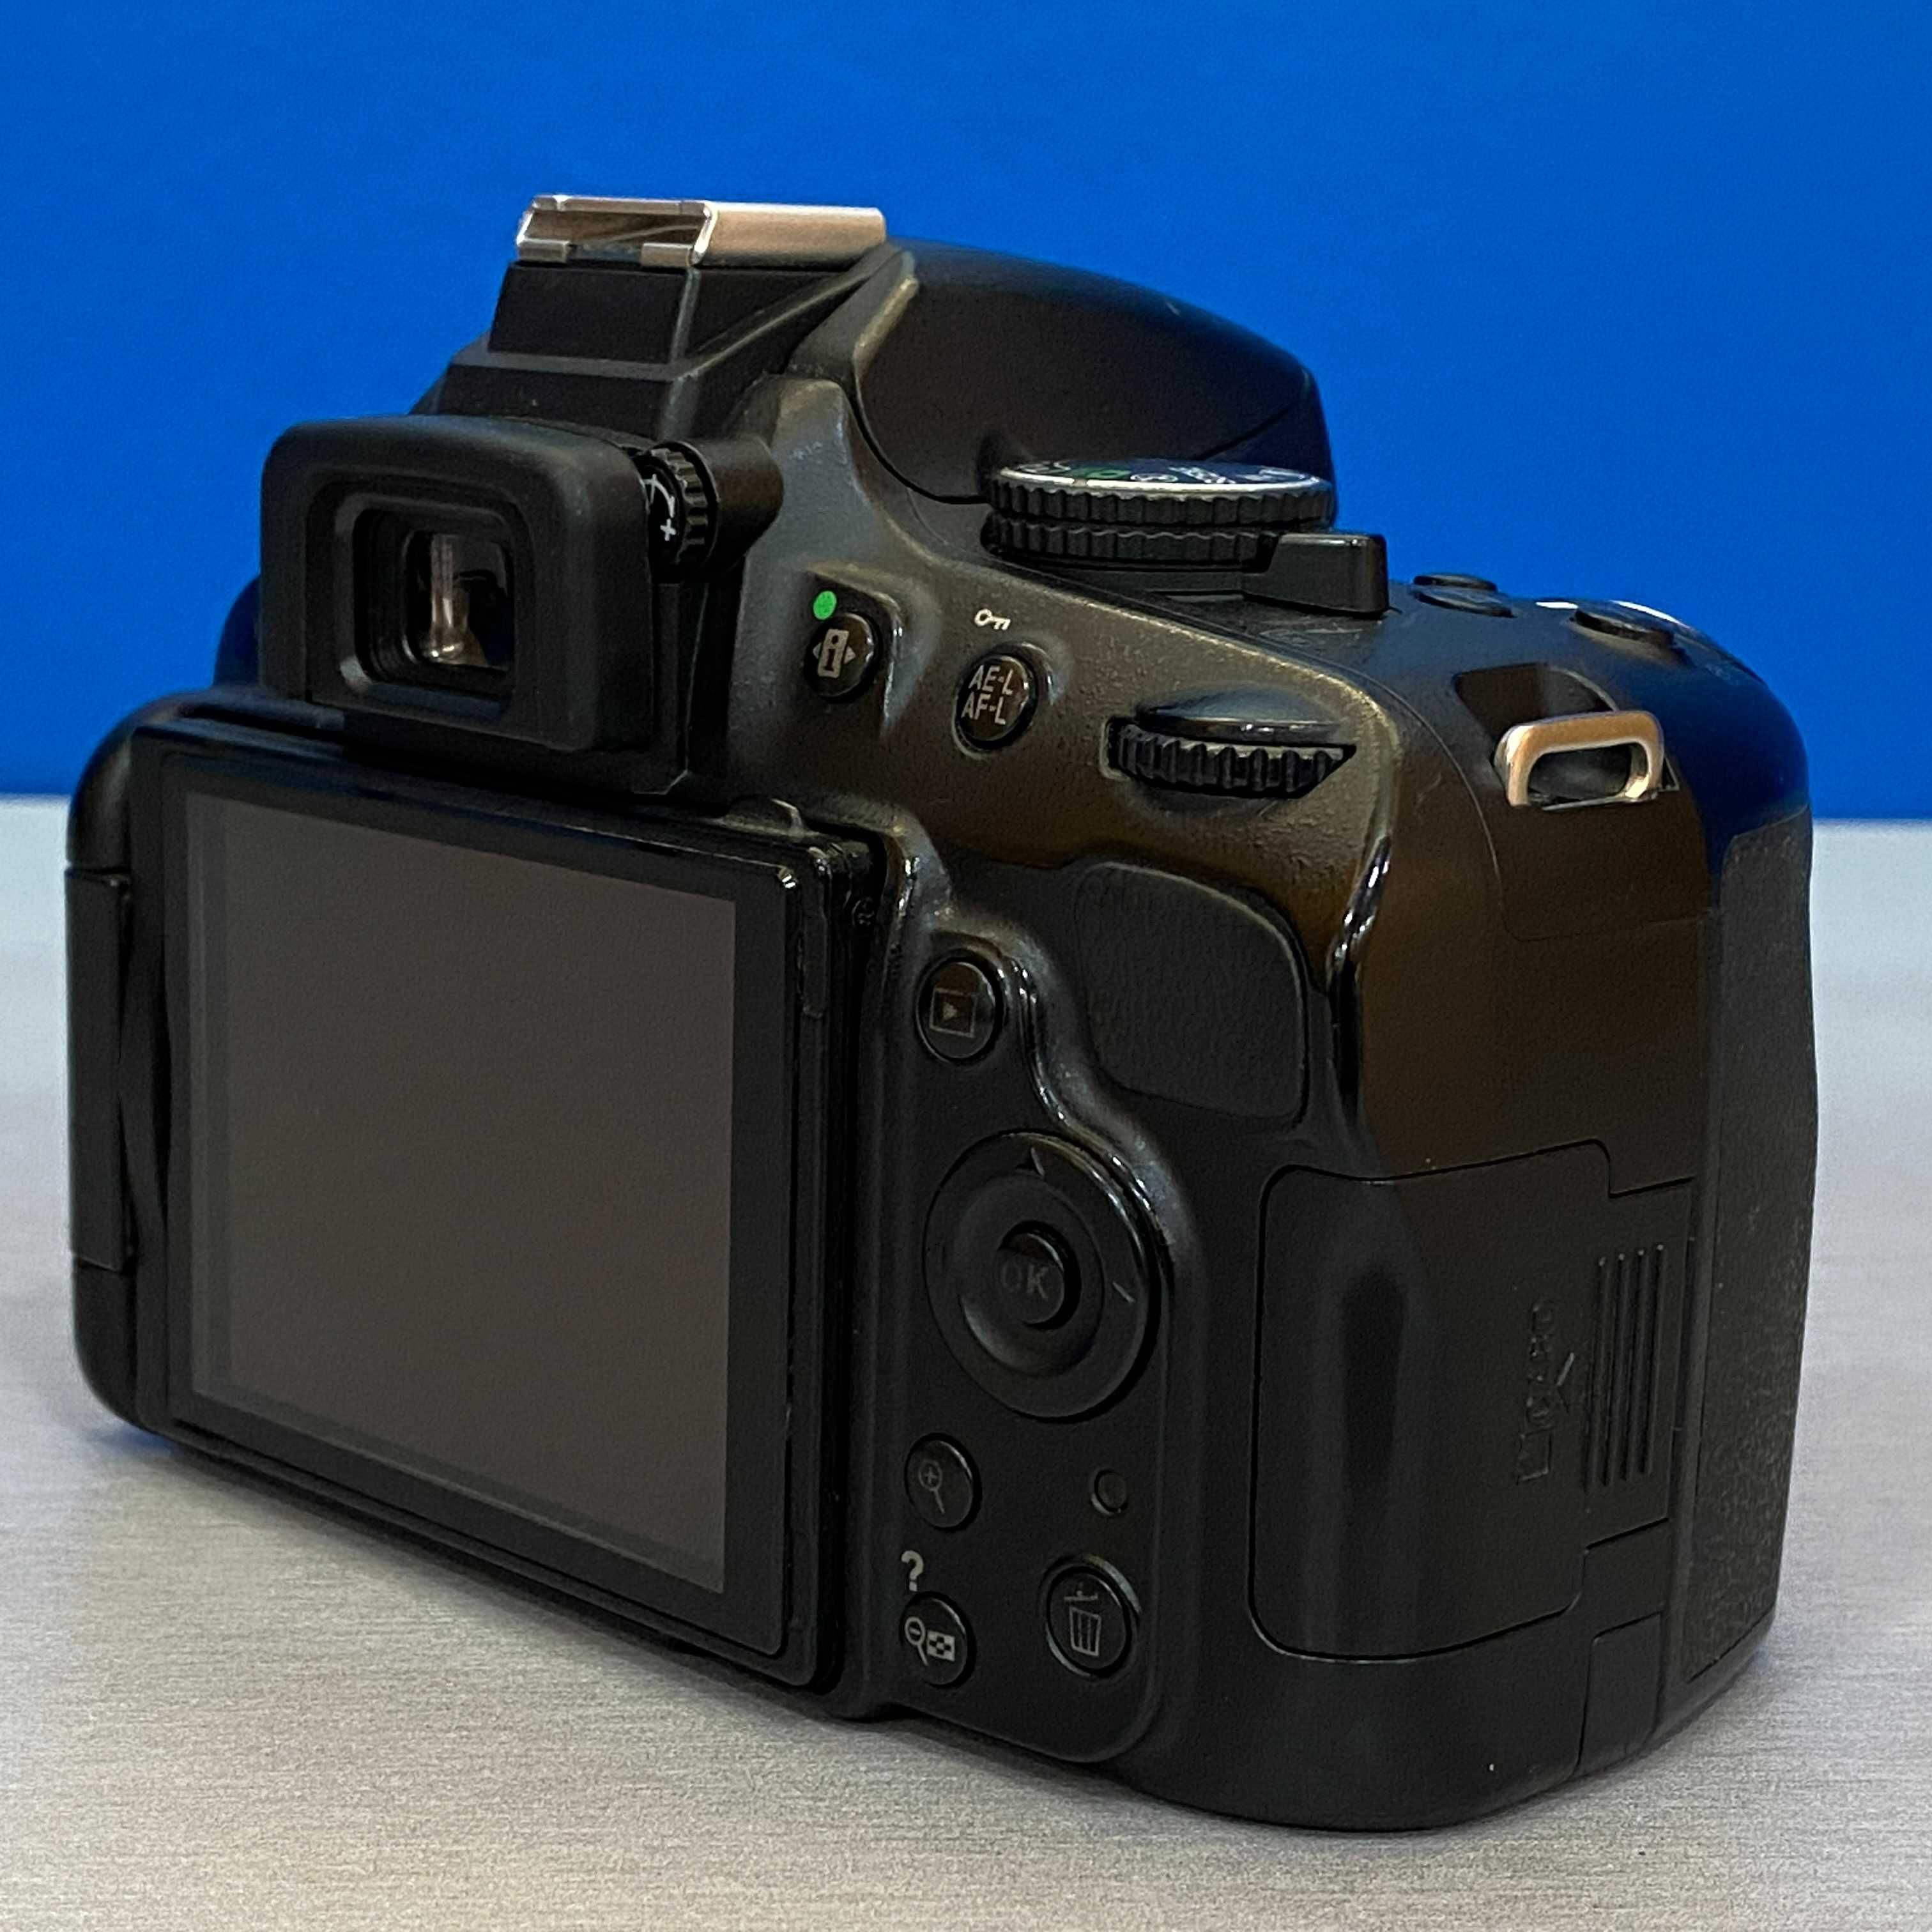 Nikon D5100 (Corpo) - 16.2MP